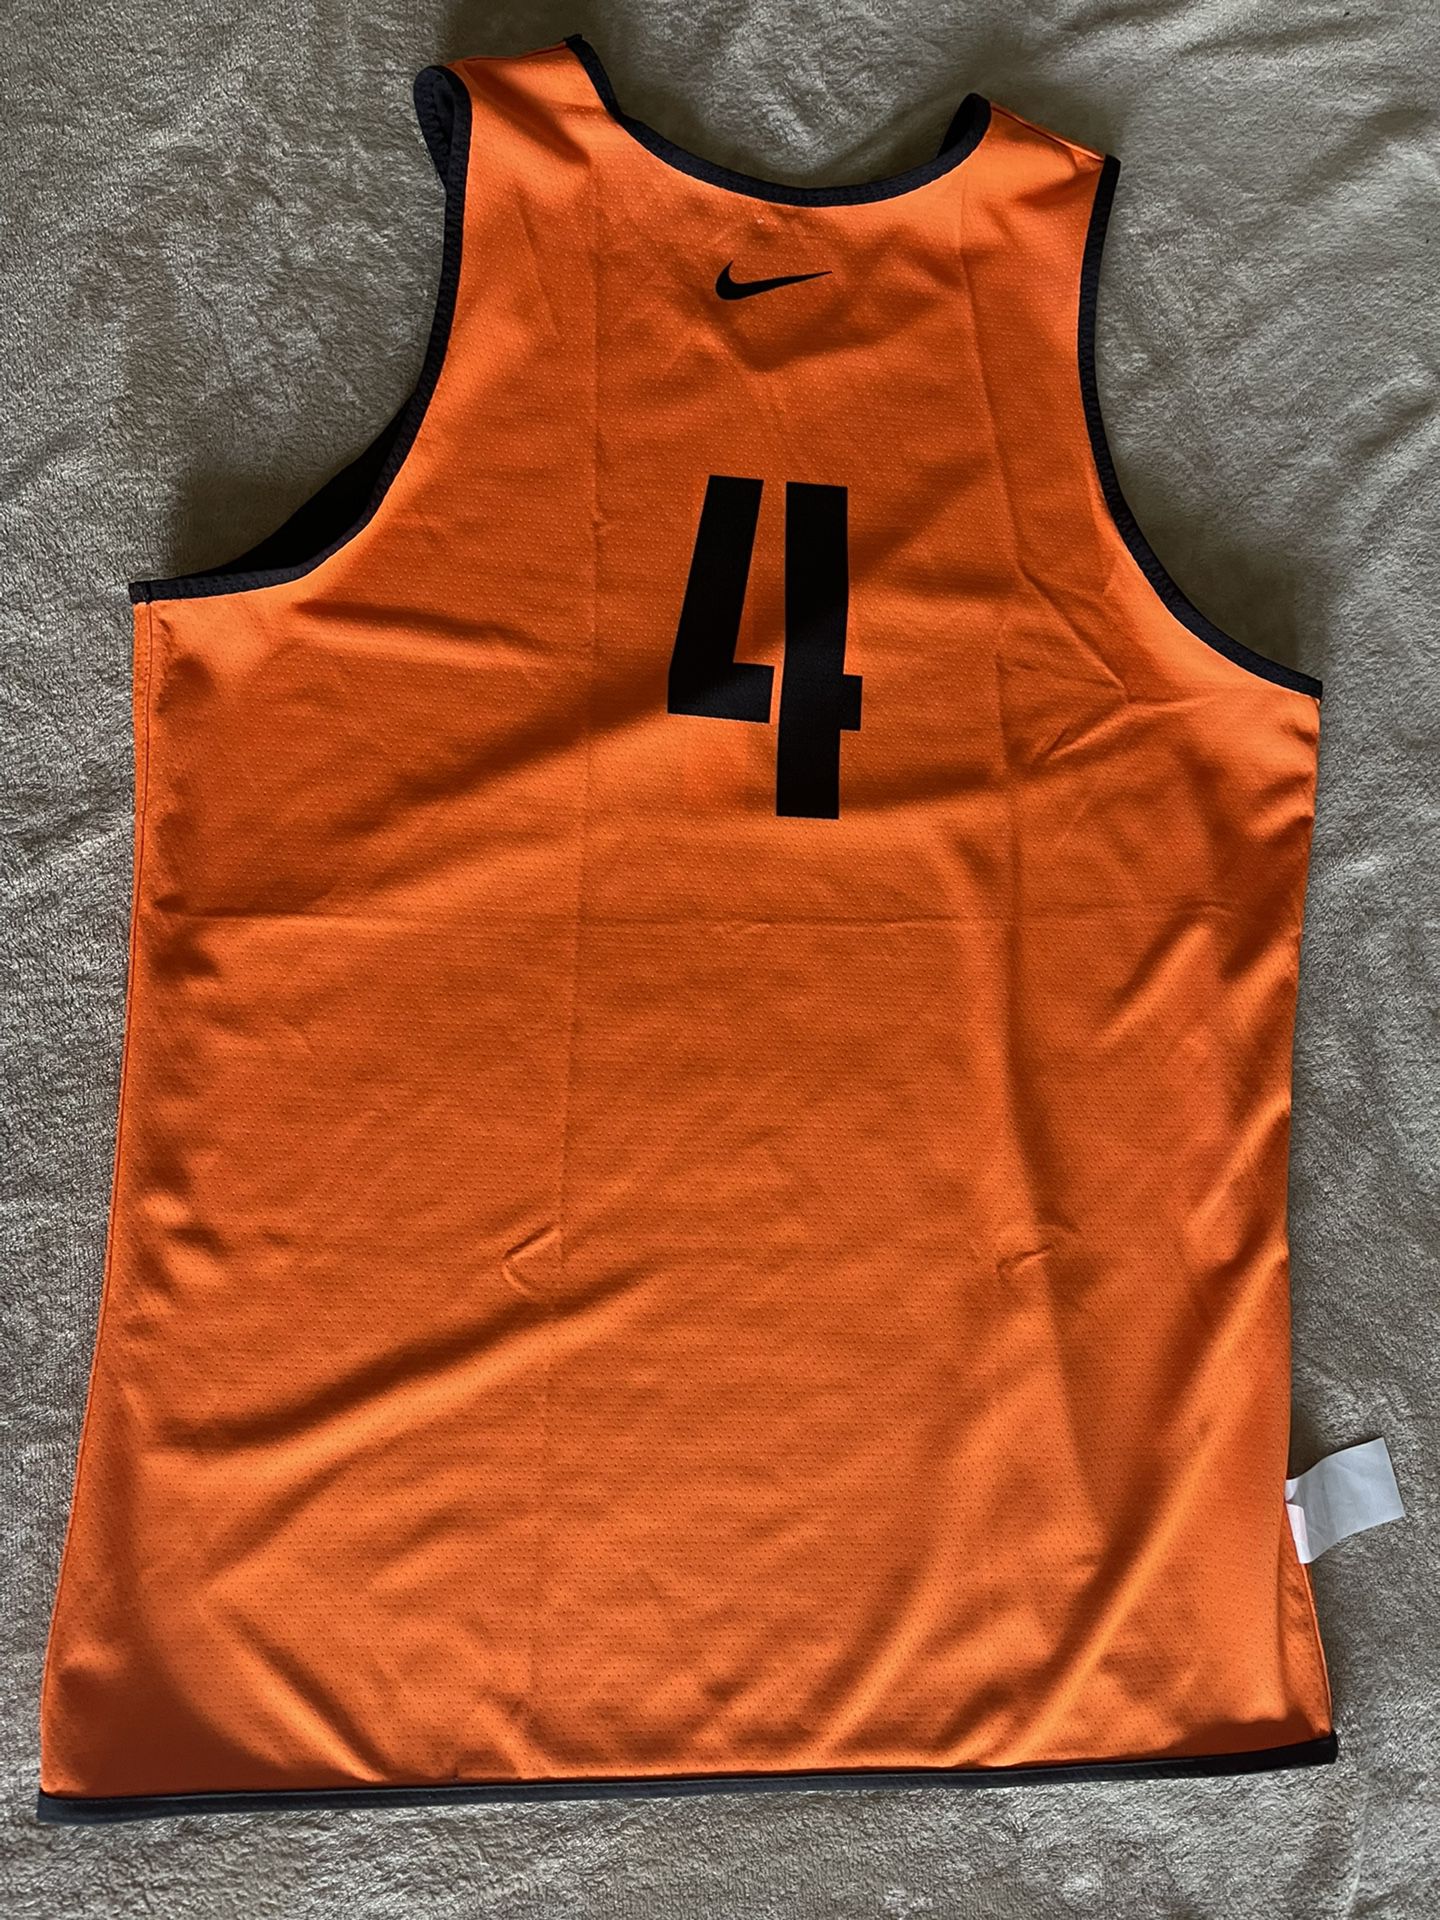 Nike, Shirts, Nike Fiba 3x3 Reversible Basketball Jersey 4 Ar65655 Xl New